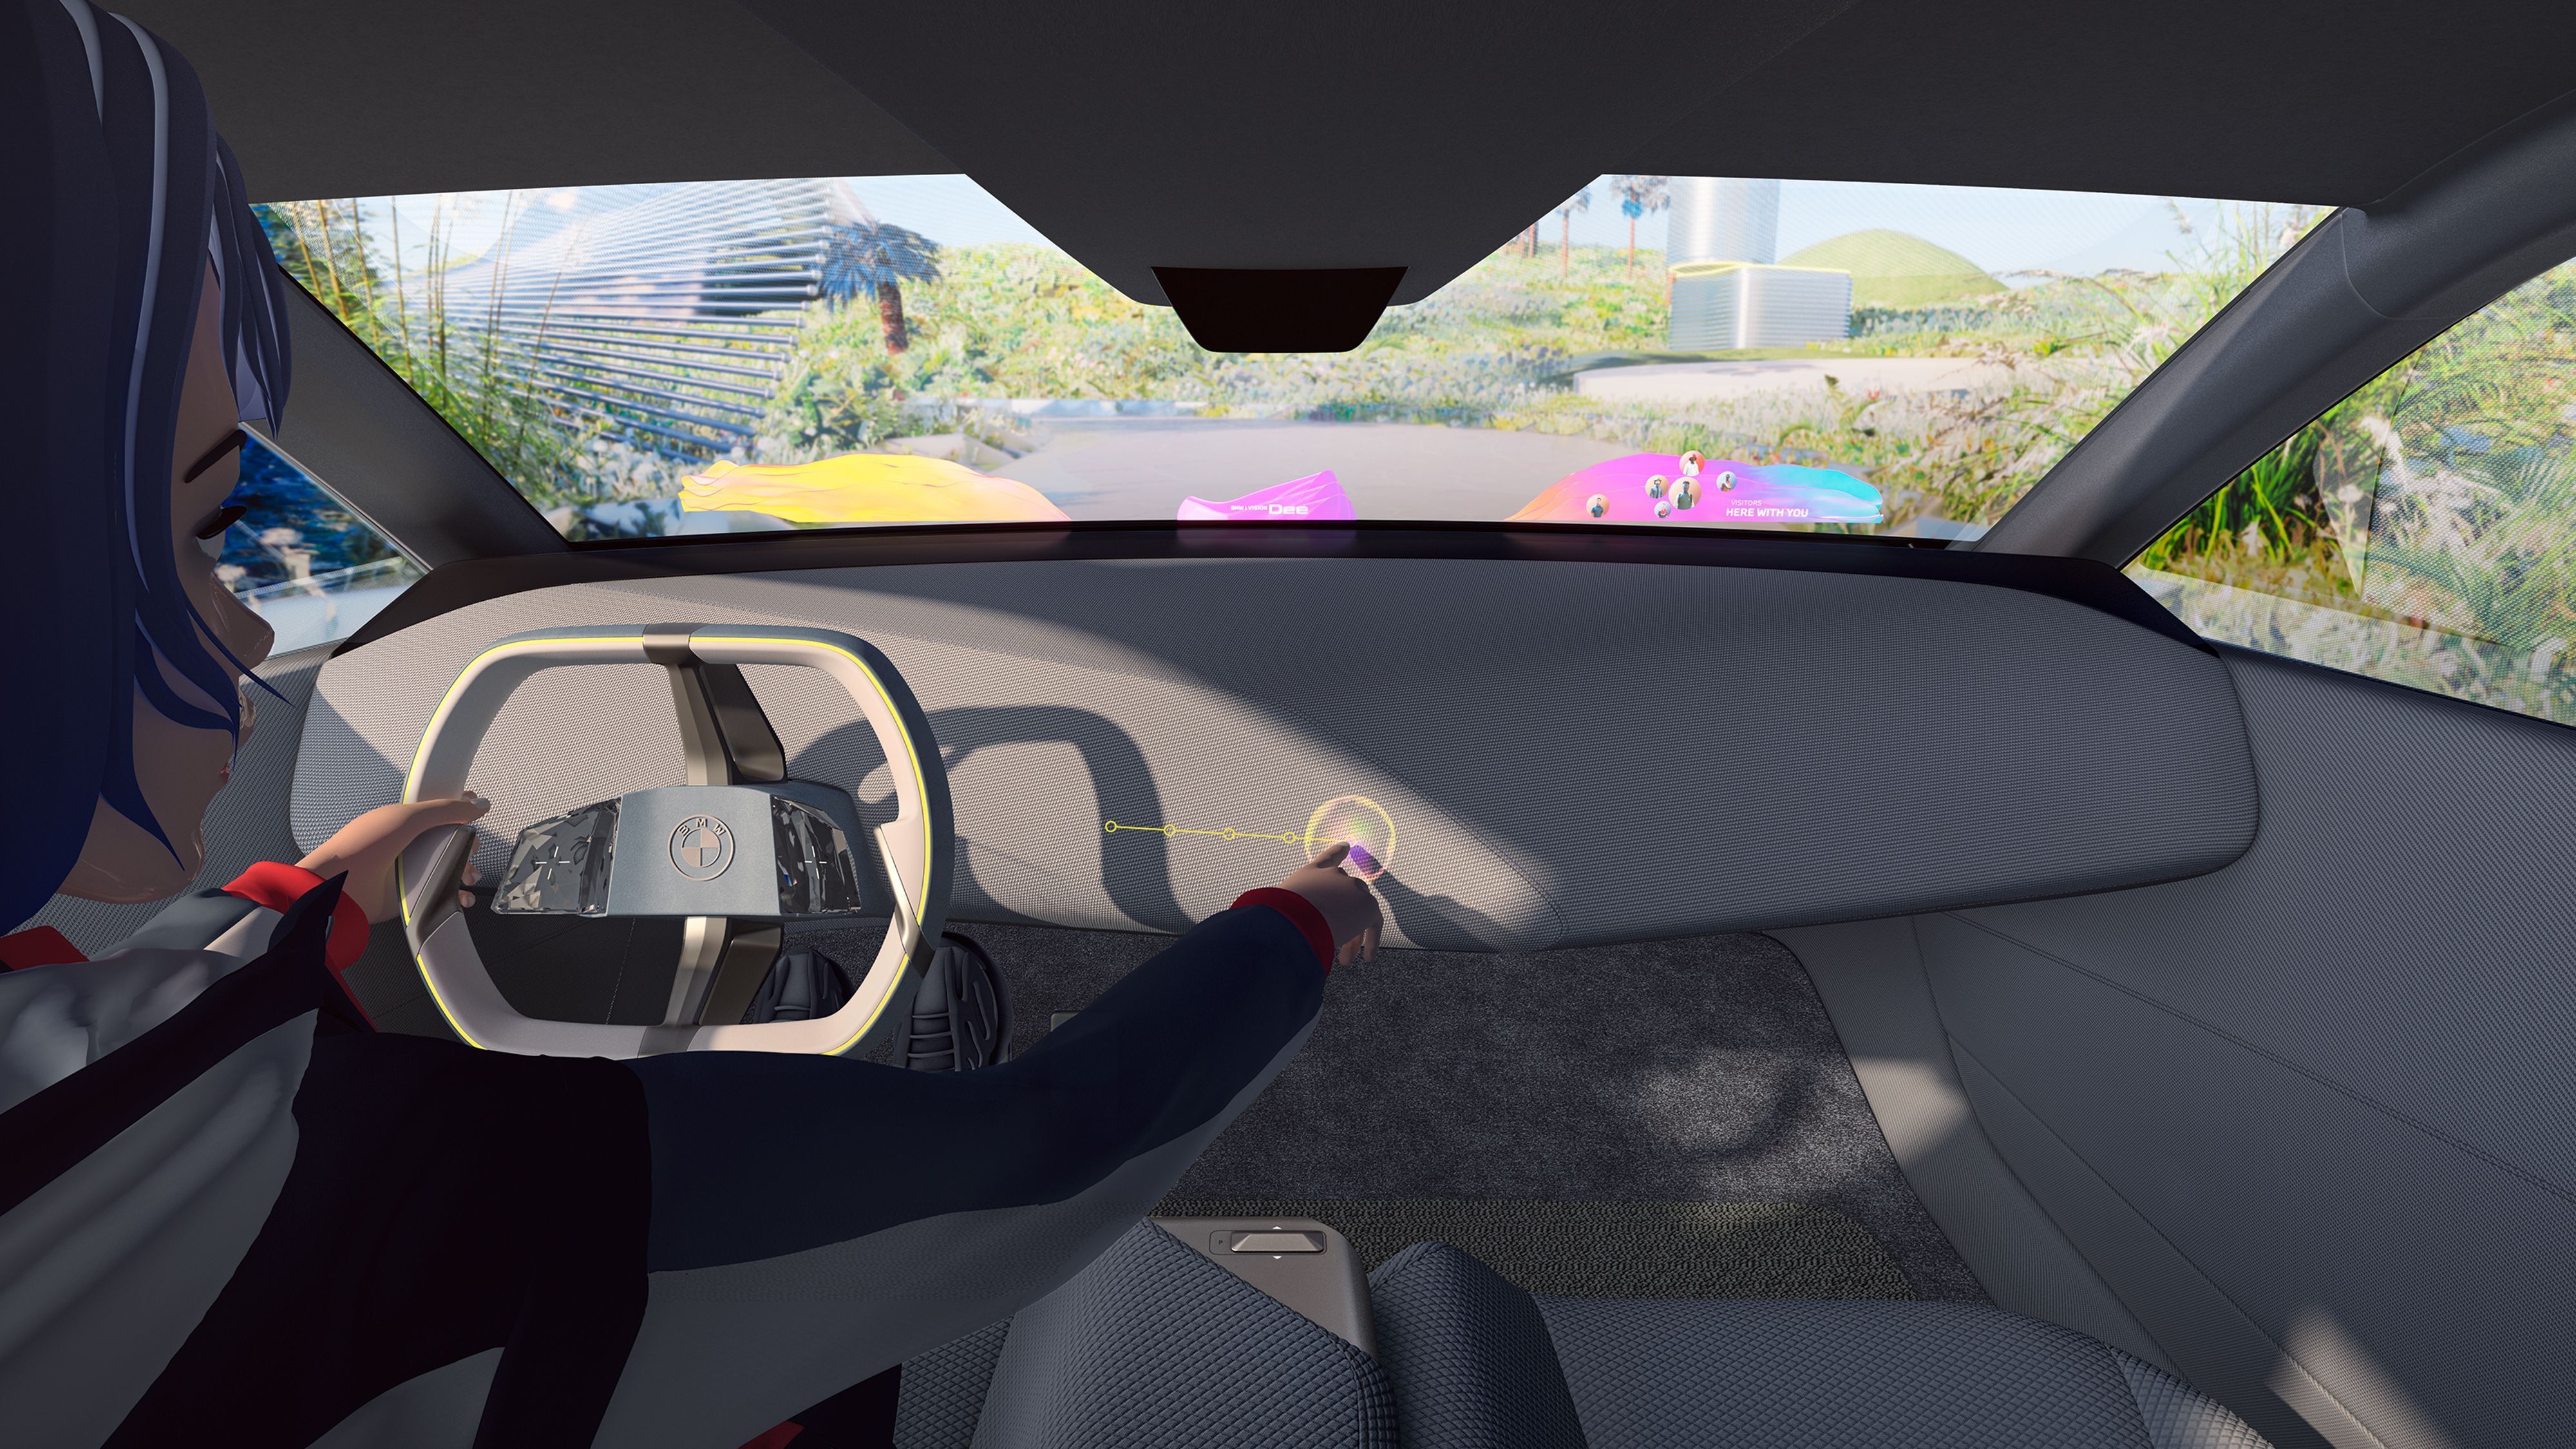 BMWのVision Neue Klasse EV Conceptが9月2日に将来のラインナップをプレビュー